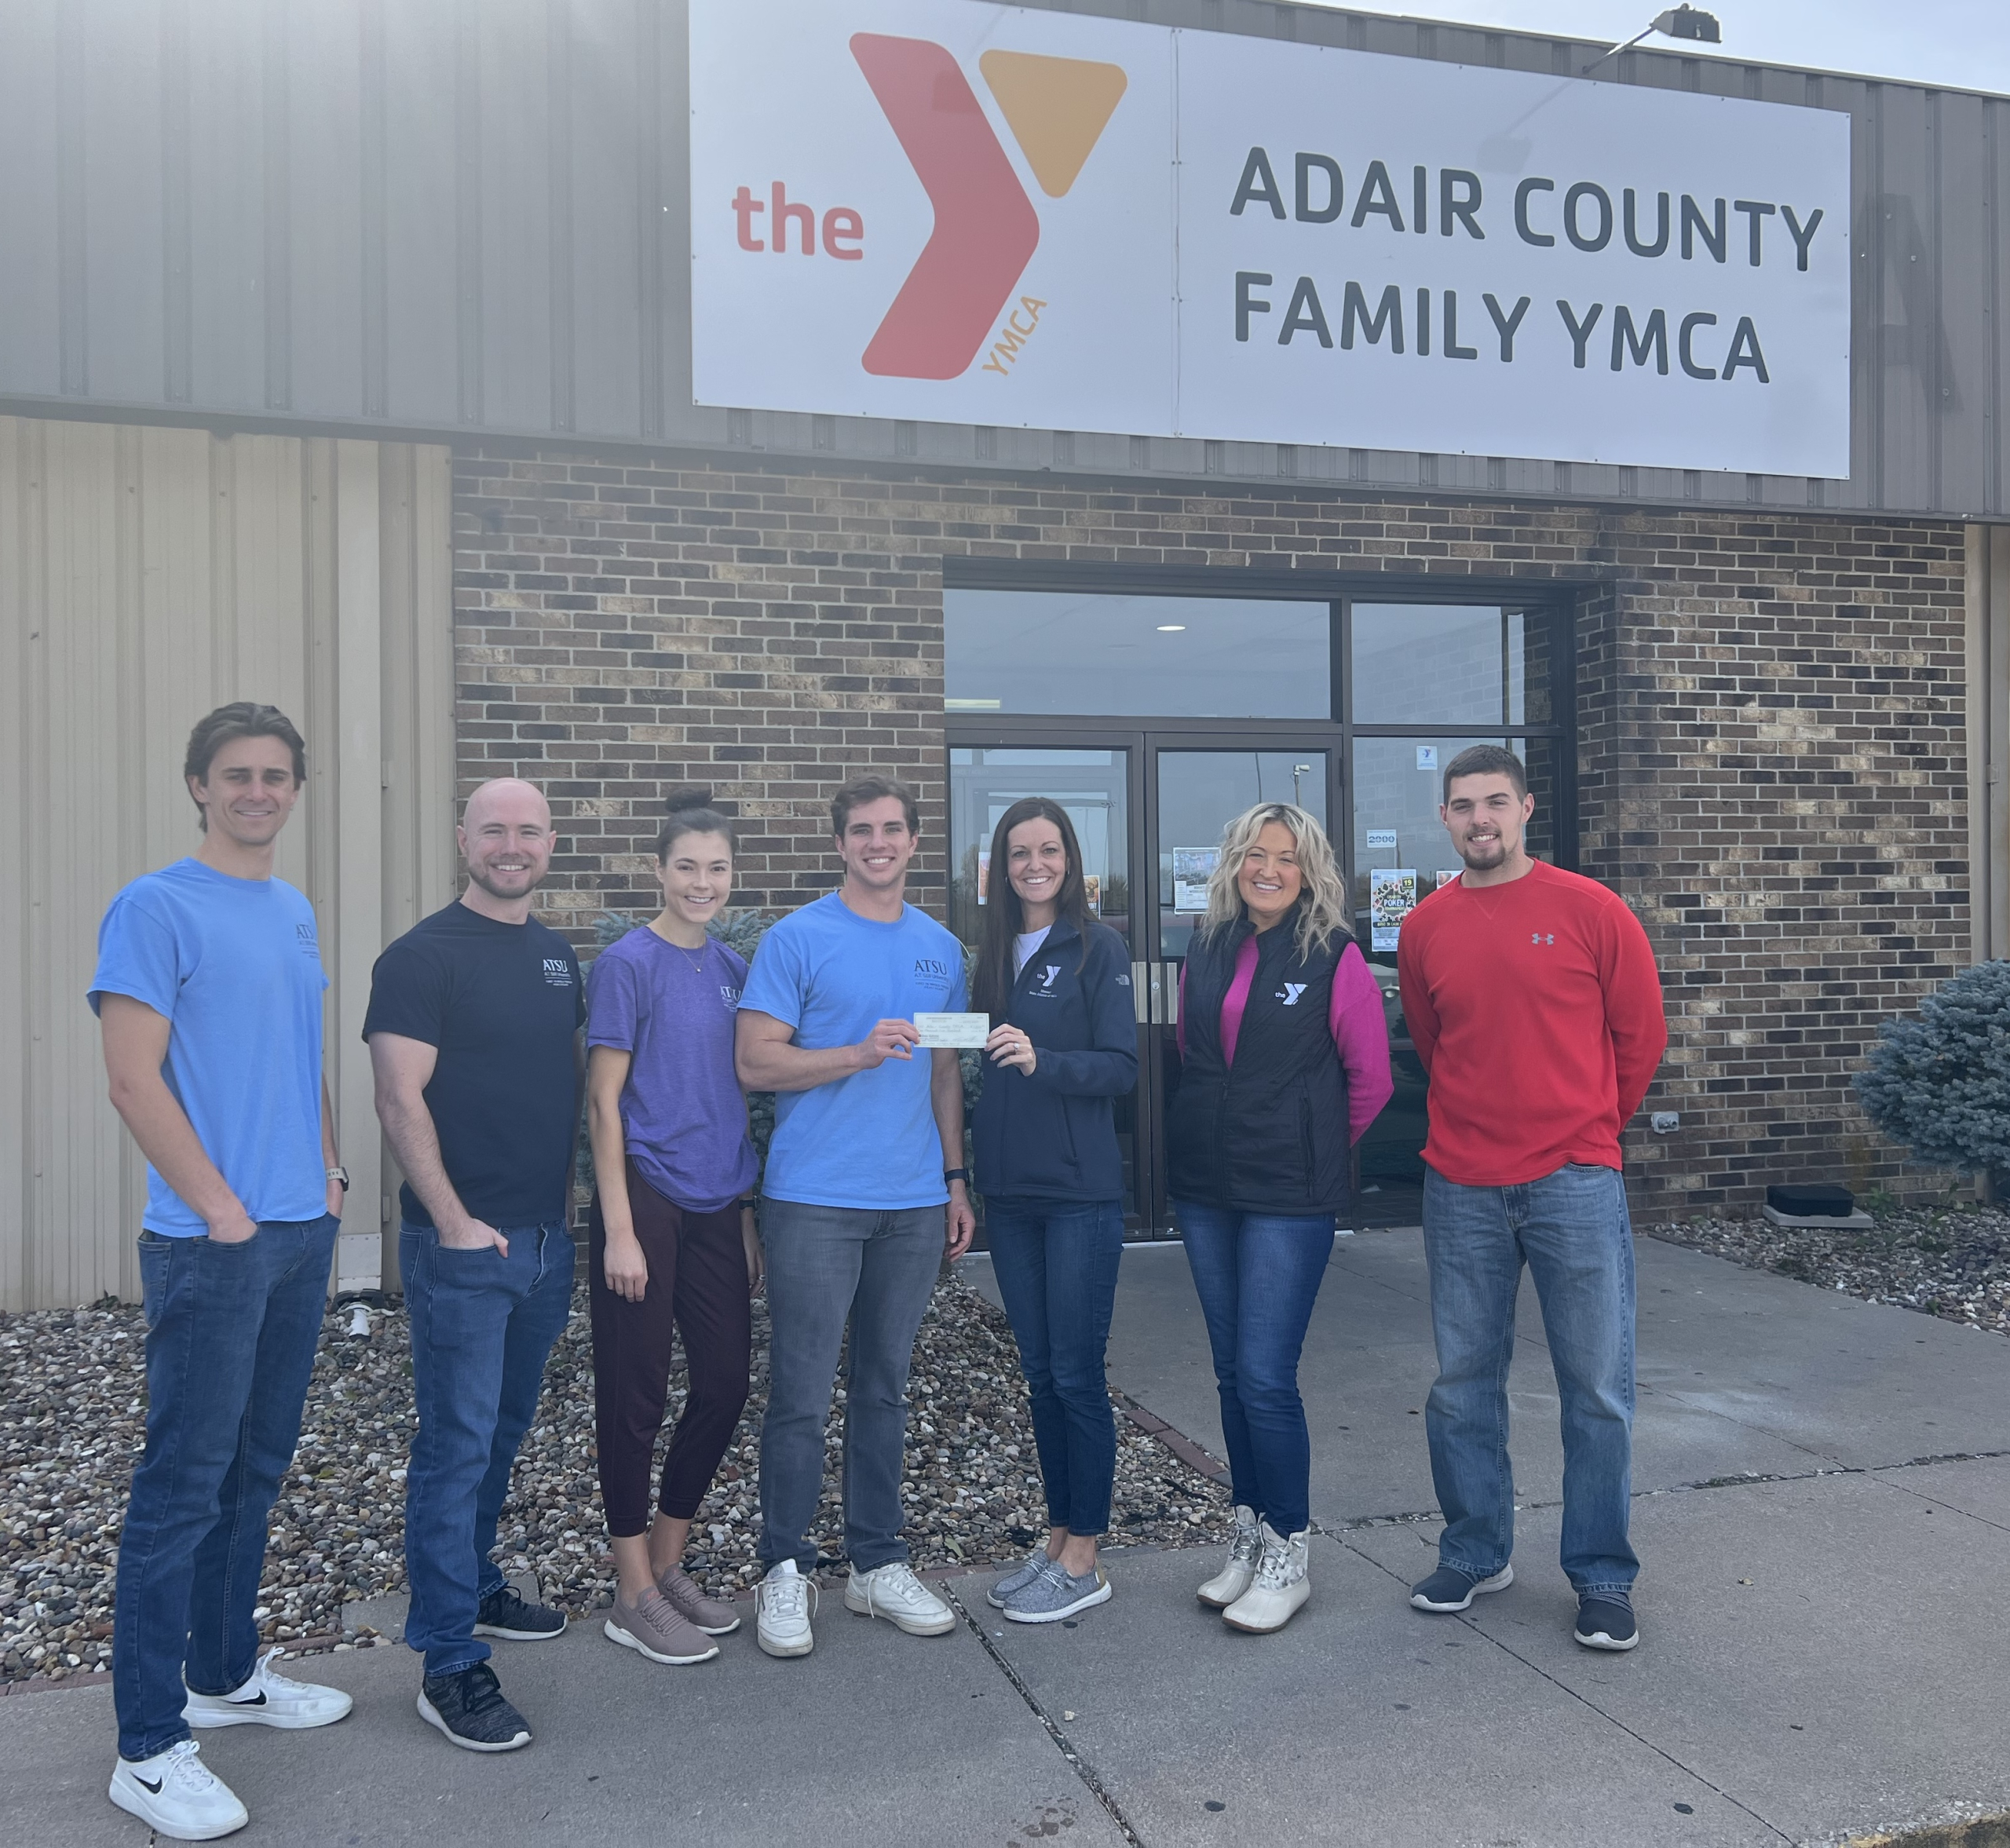 2022 Gutensohn Golf Classic raises $1,500 for Adair County YMCA